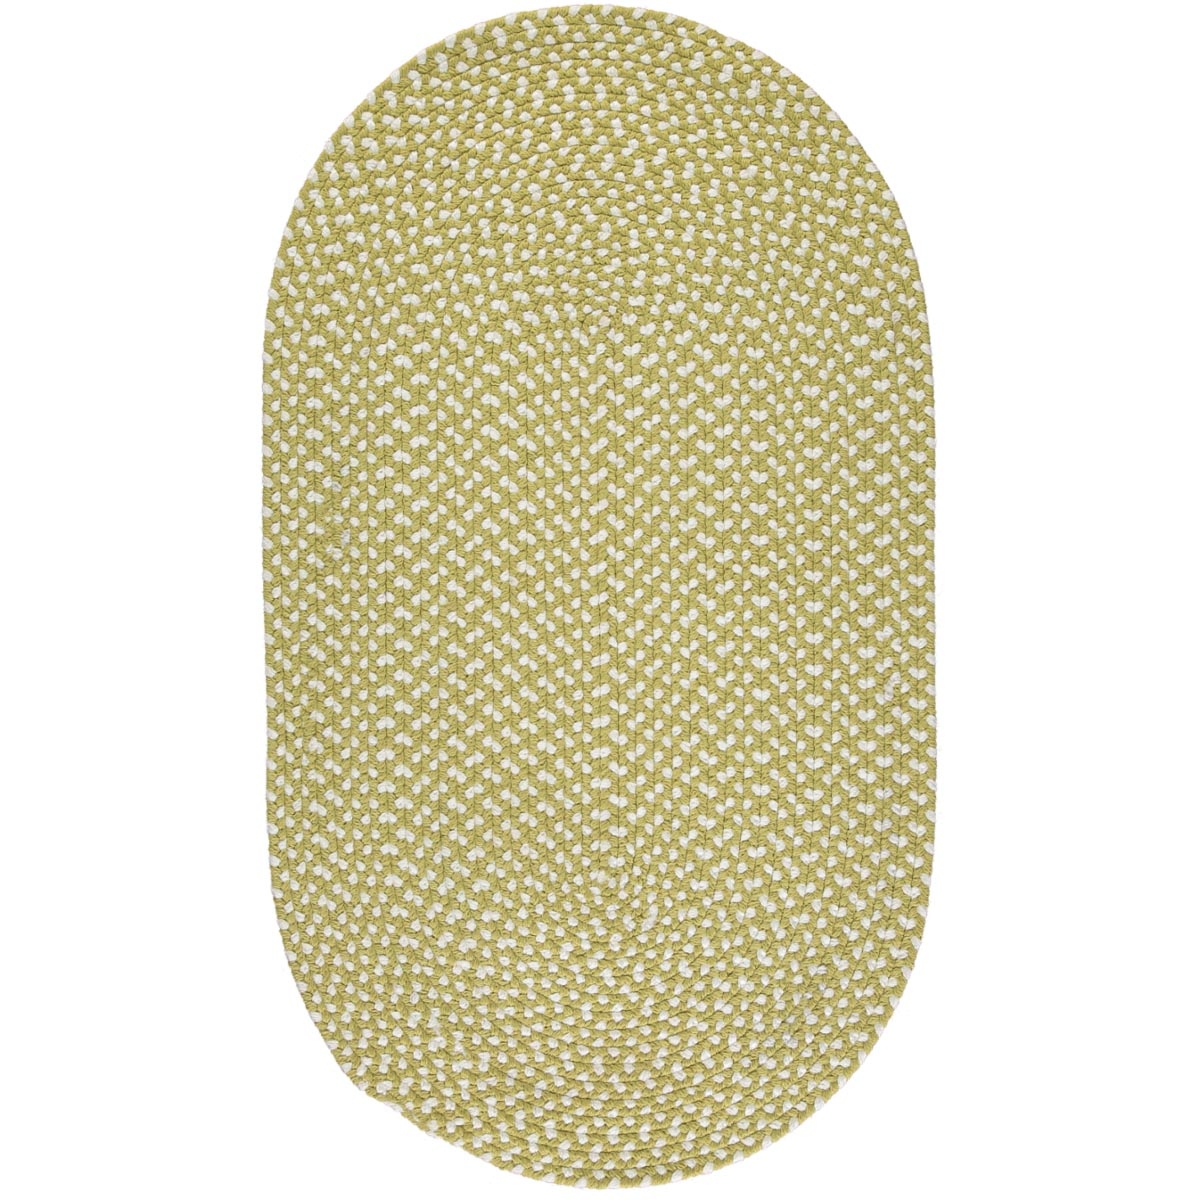 Apple-eco-braided-rug